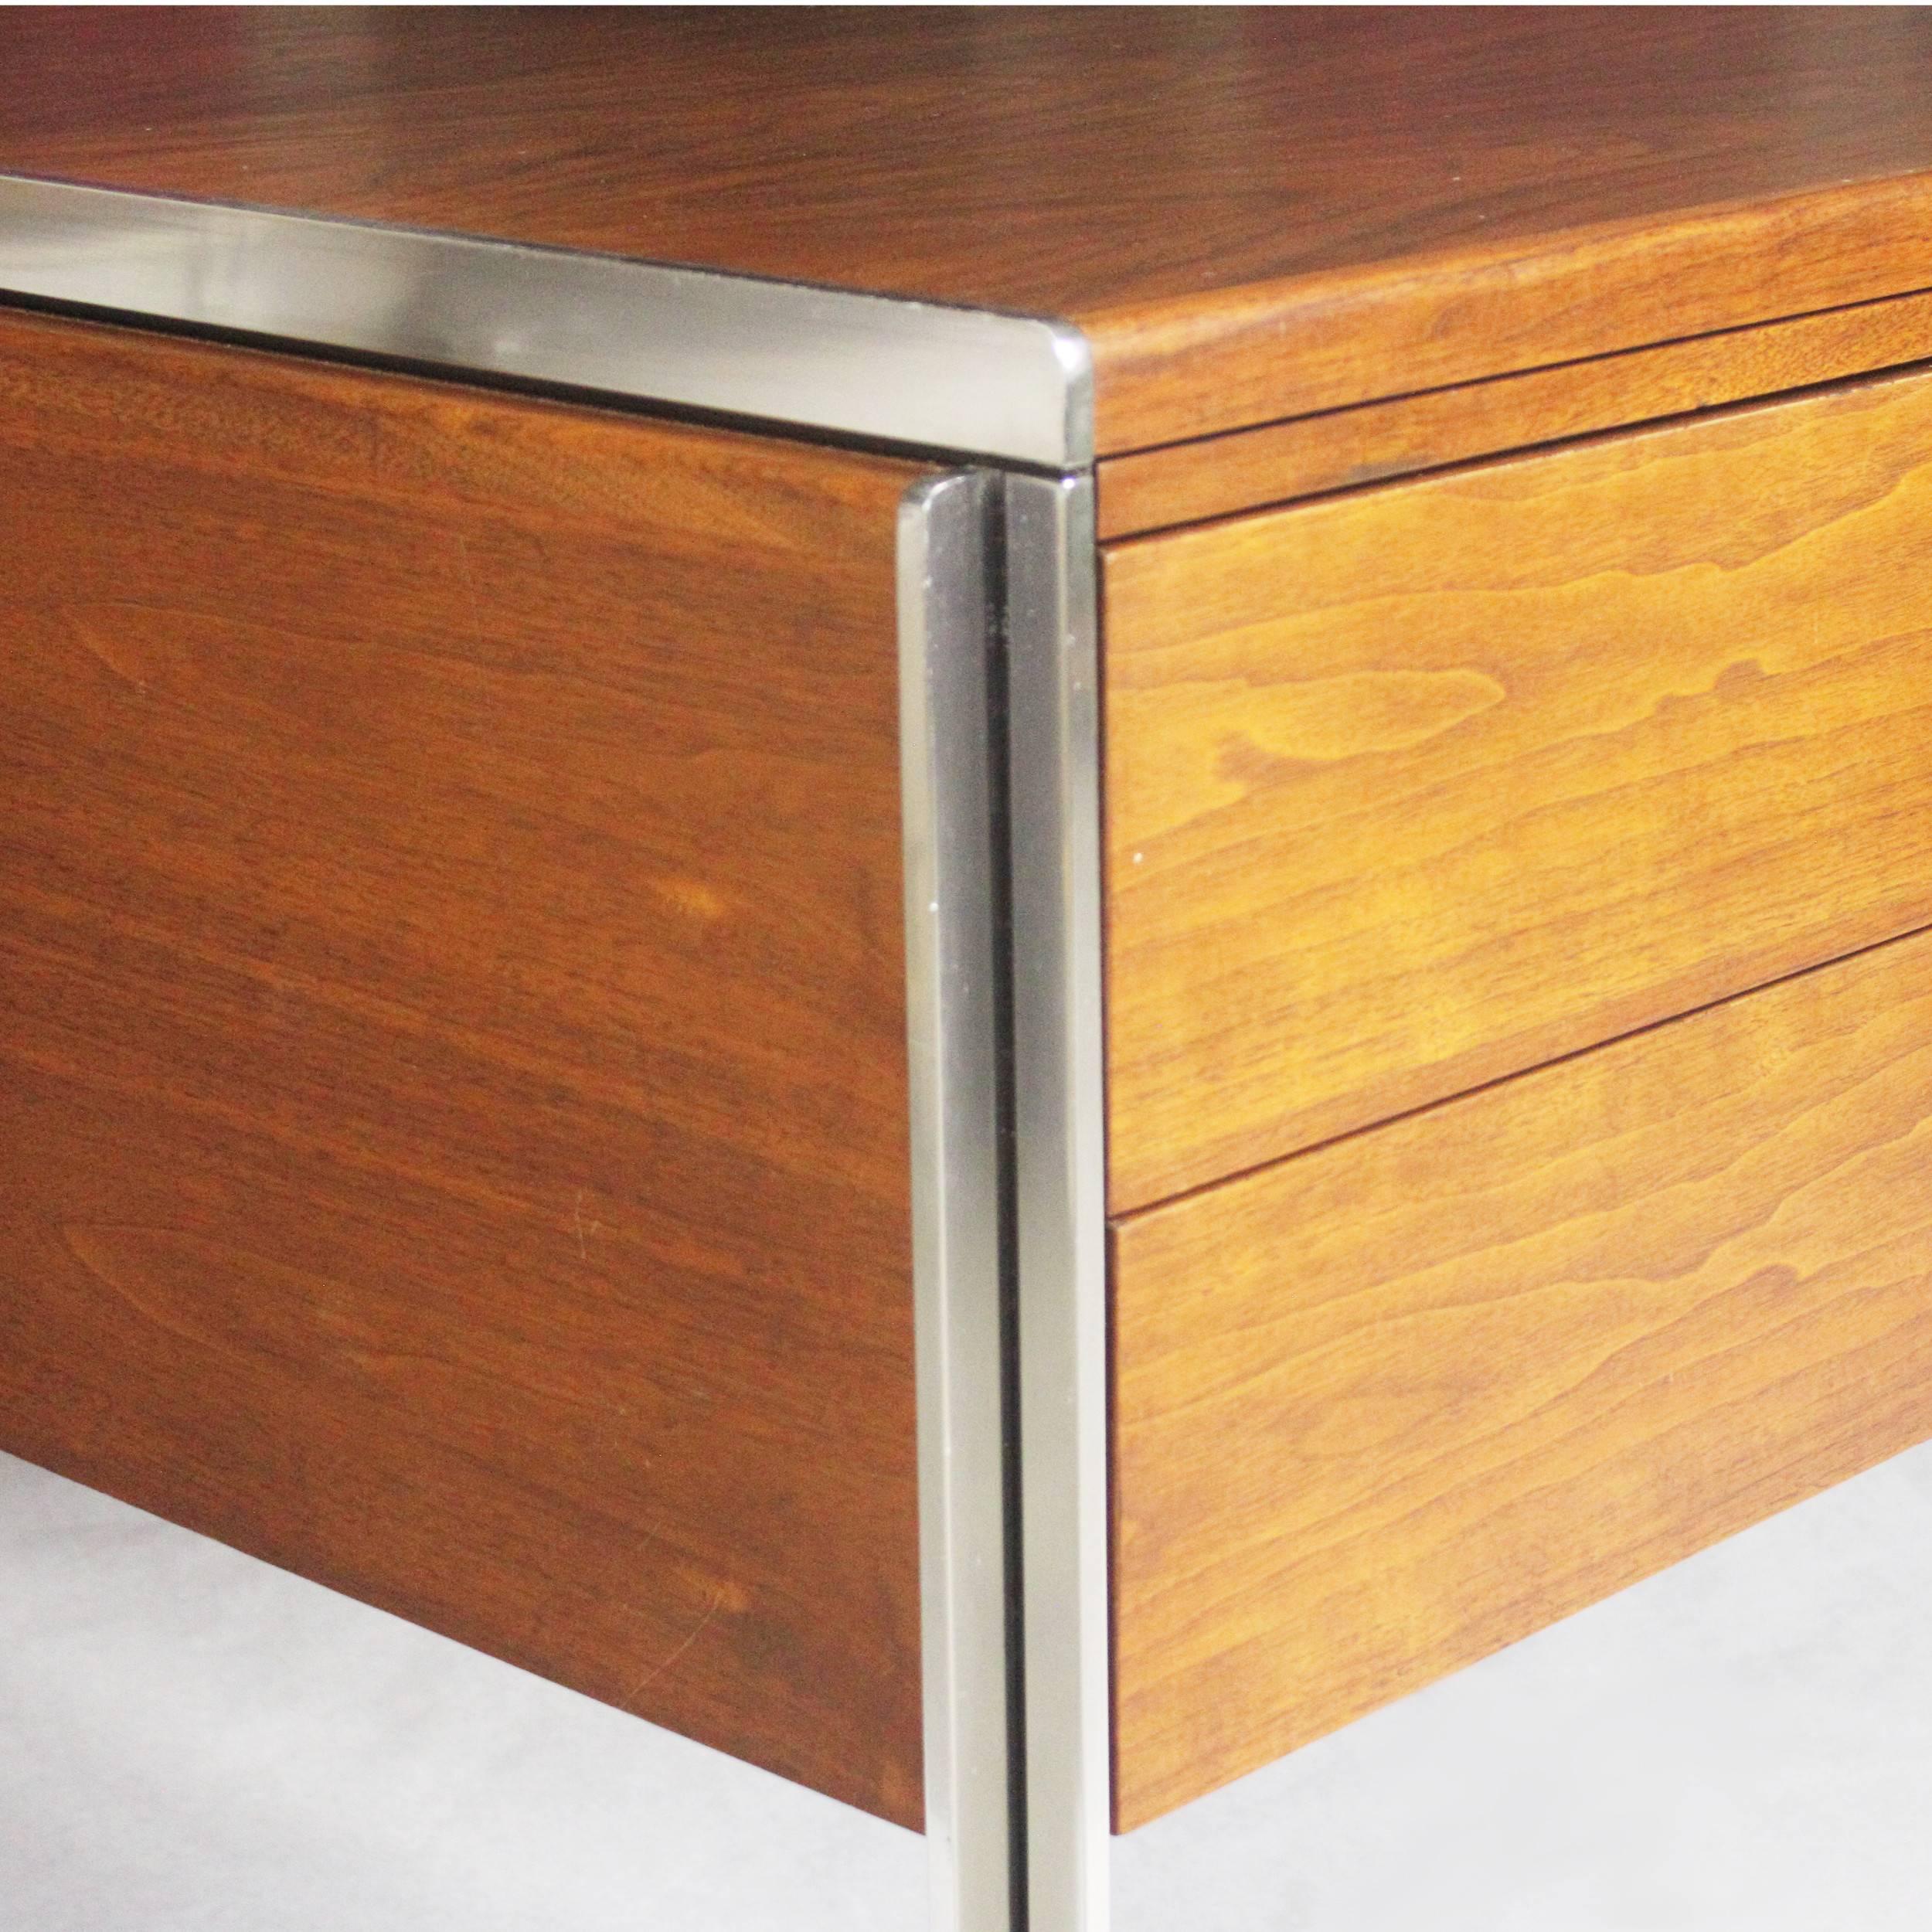 Late 20th Century Extraordinary 1970s Mid-Century Modern Walnut and Aluminium Desk by Stow Davis